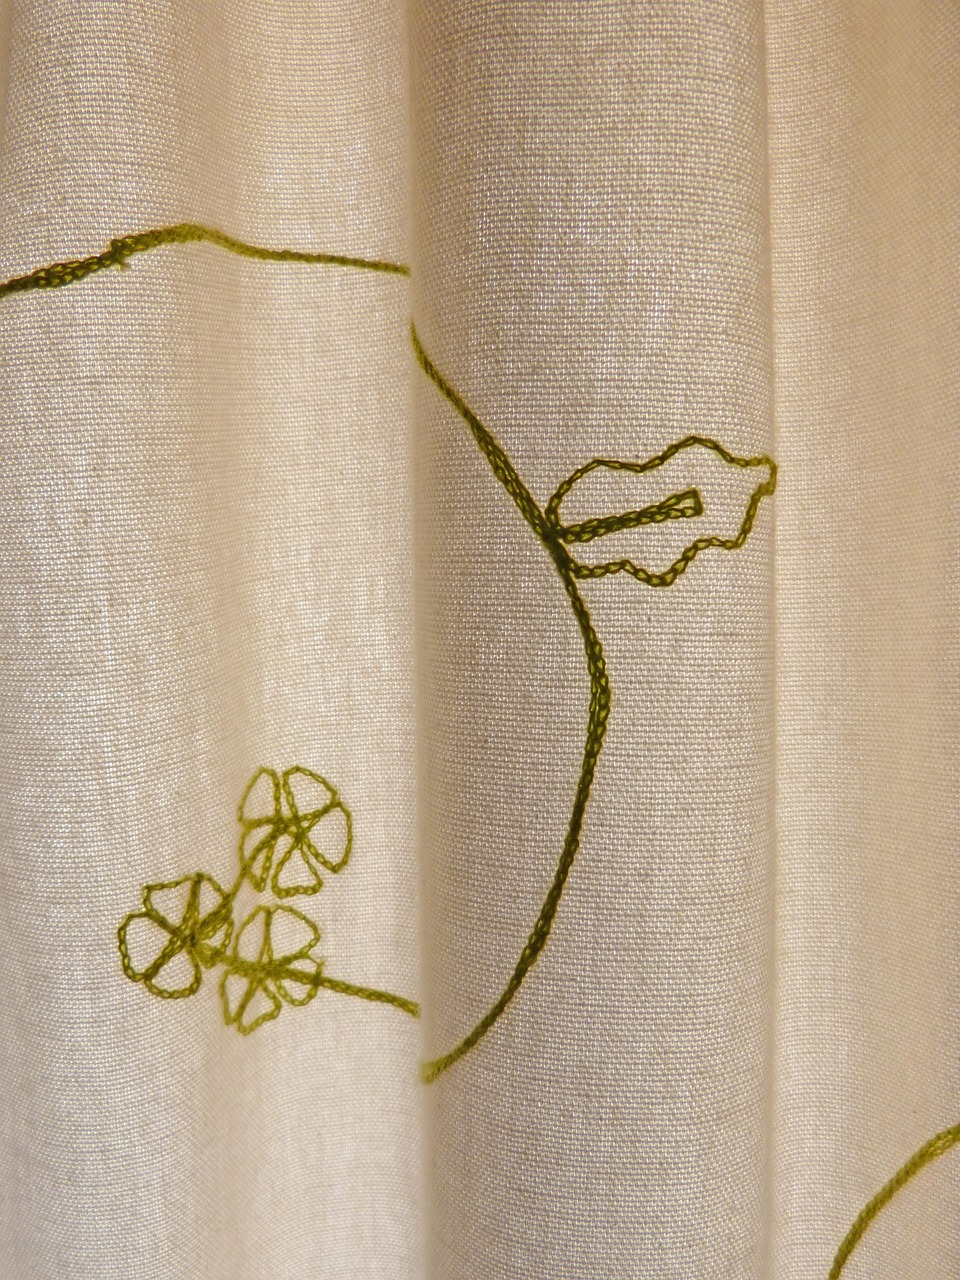 curtain burlap embroidery free photo